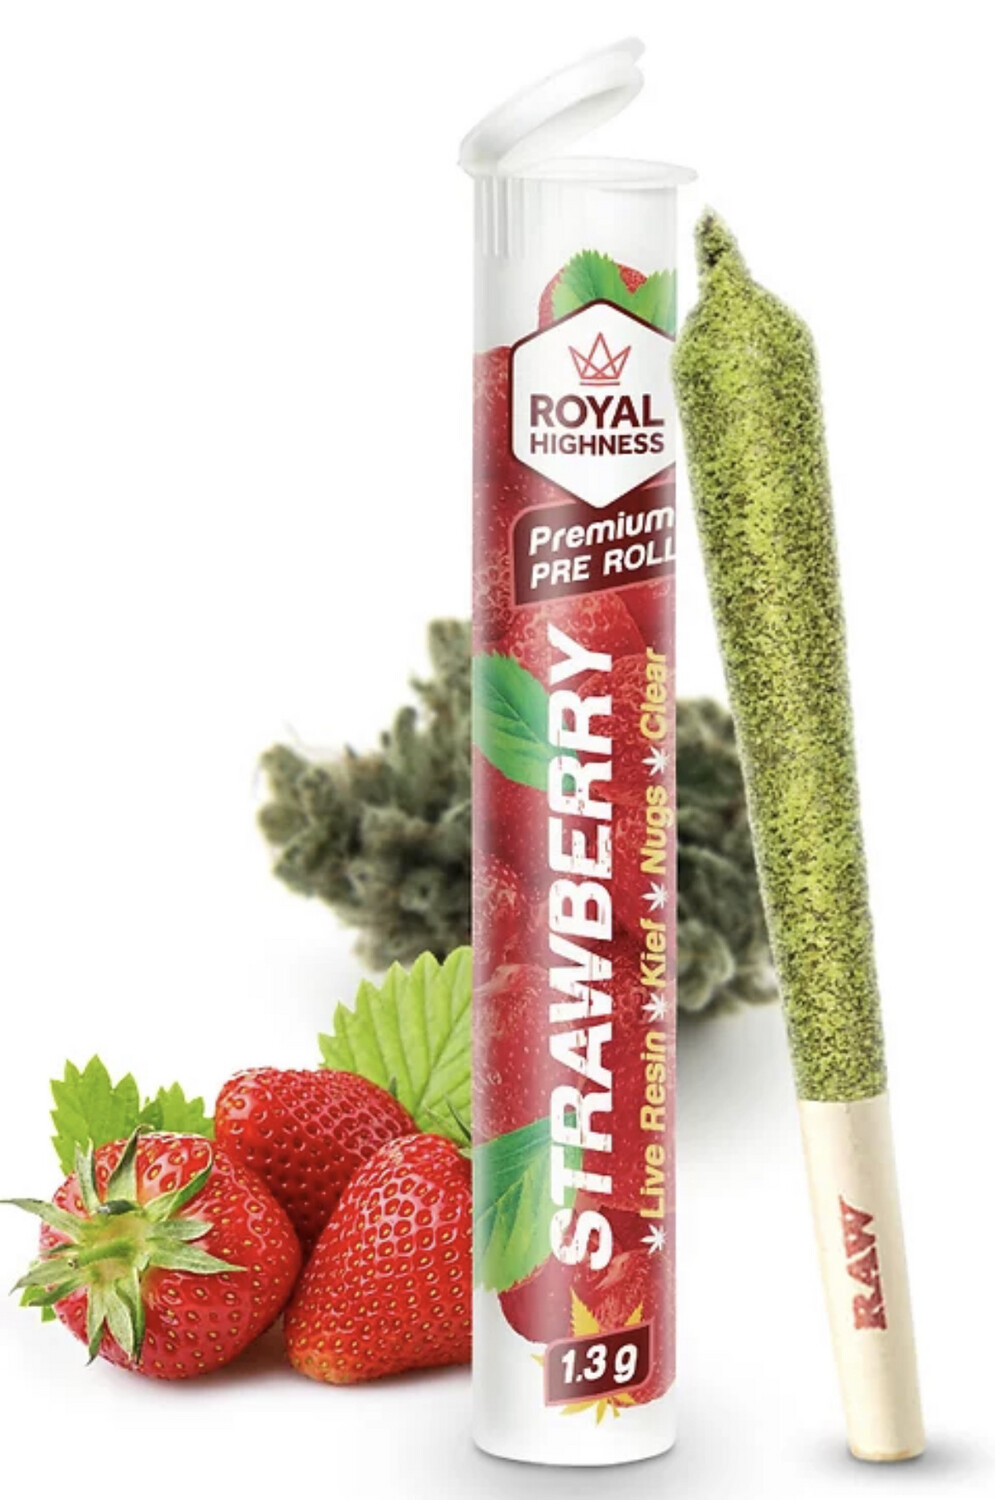 Strawberry (1.3g) - Royal Highness